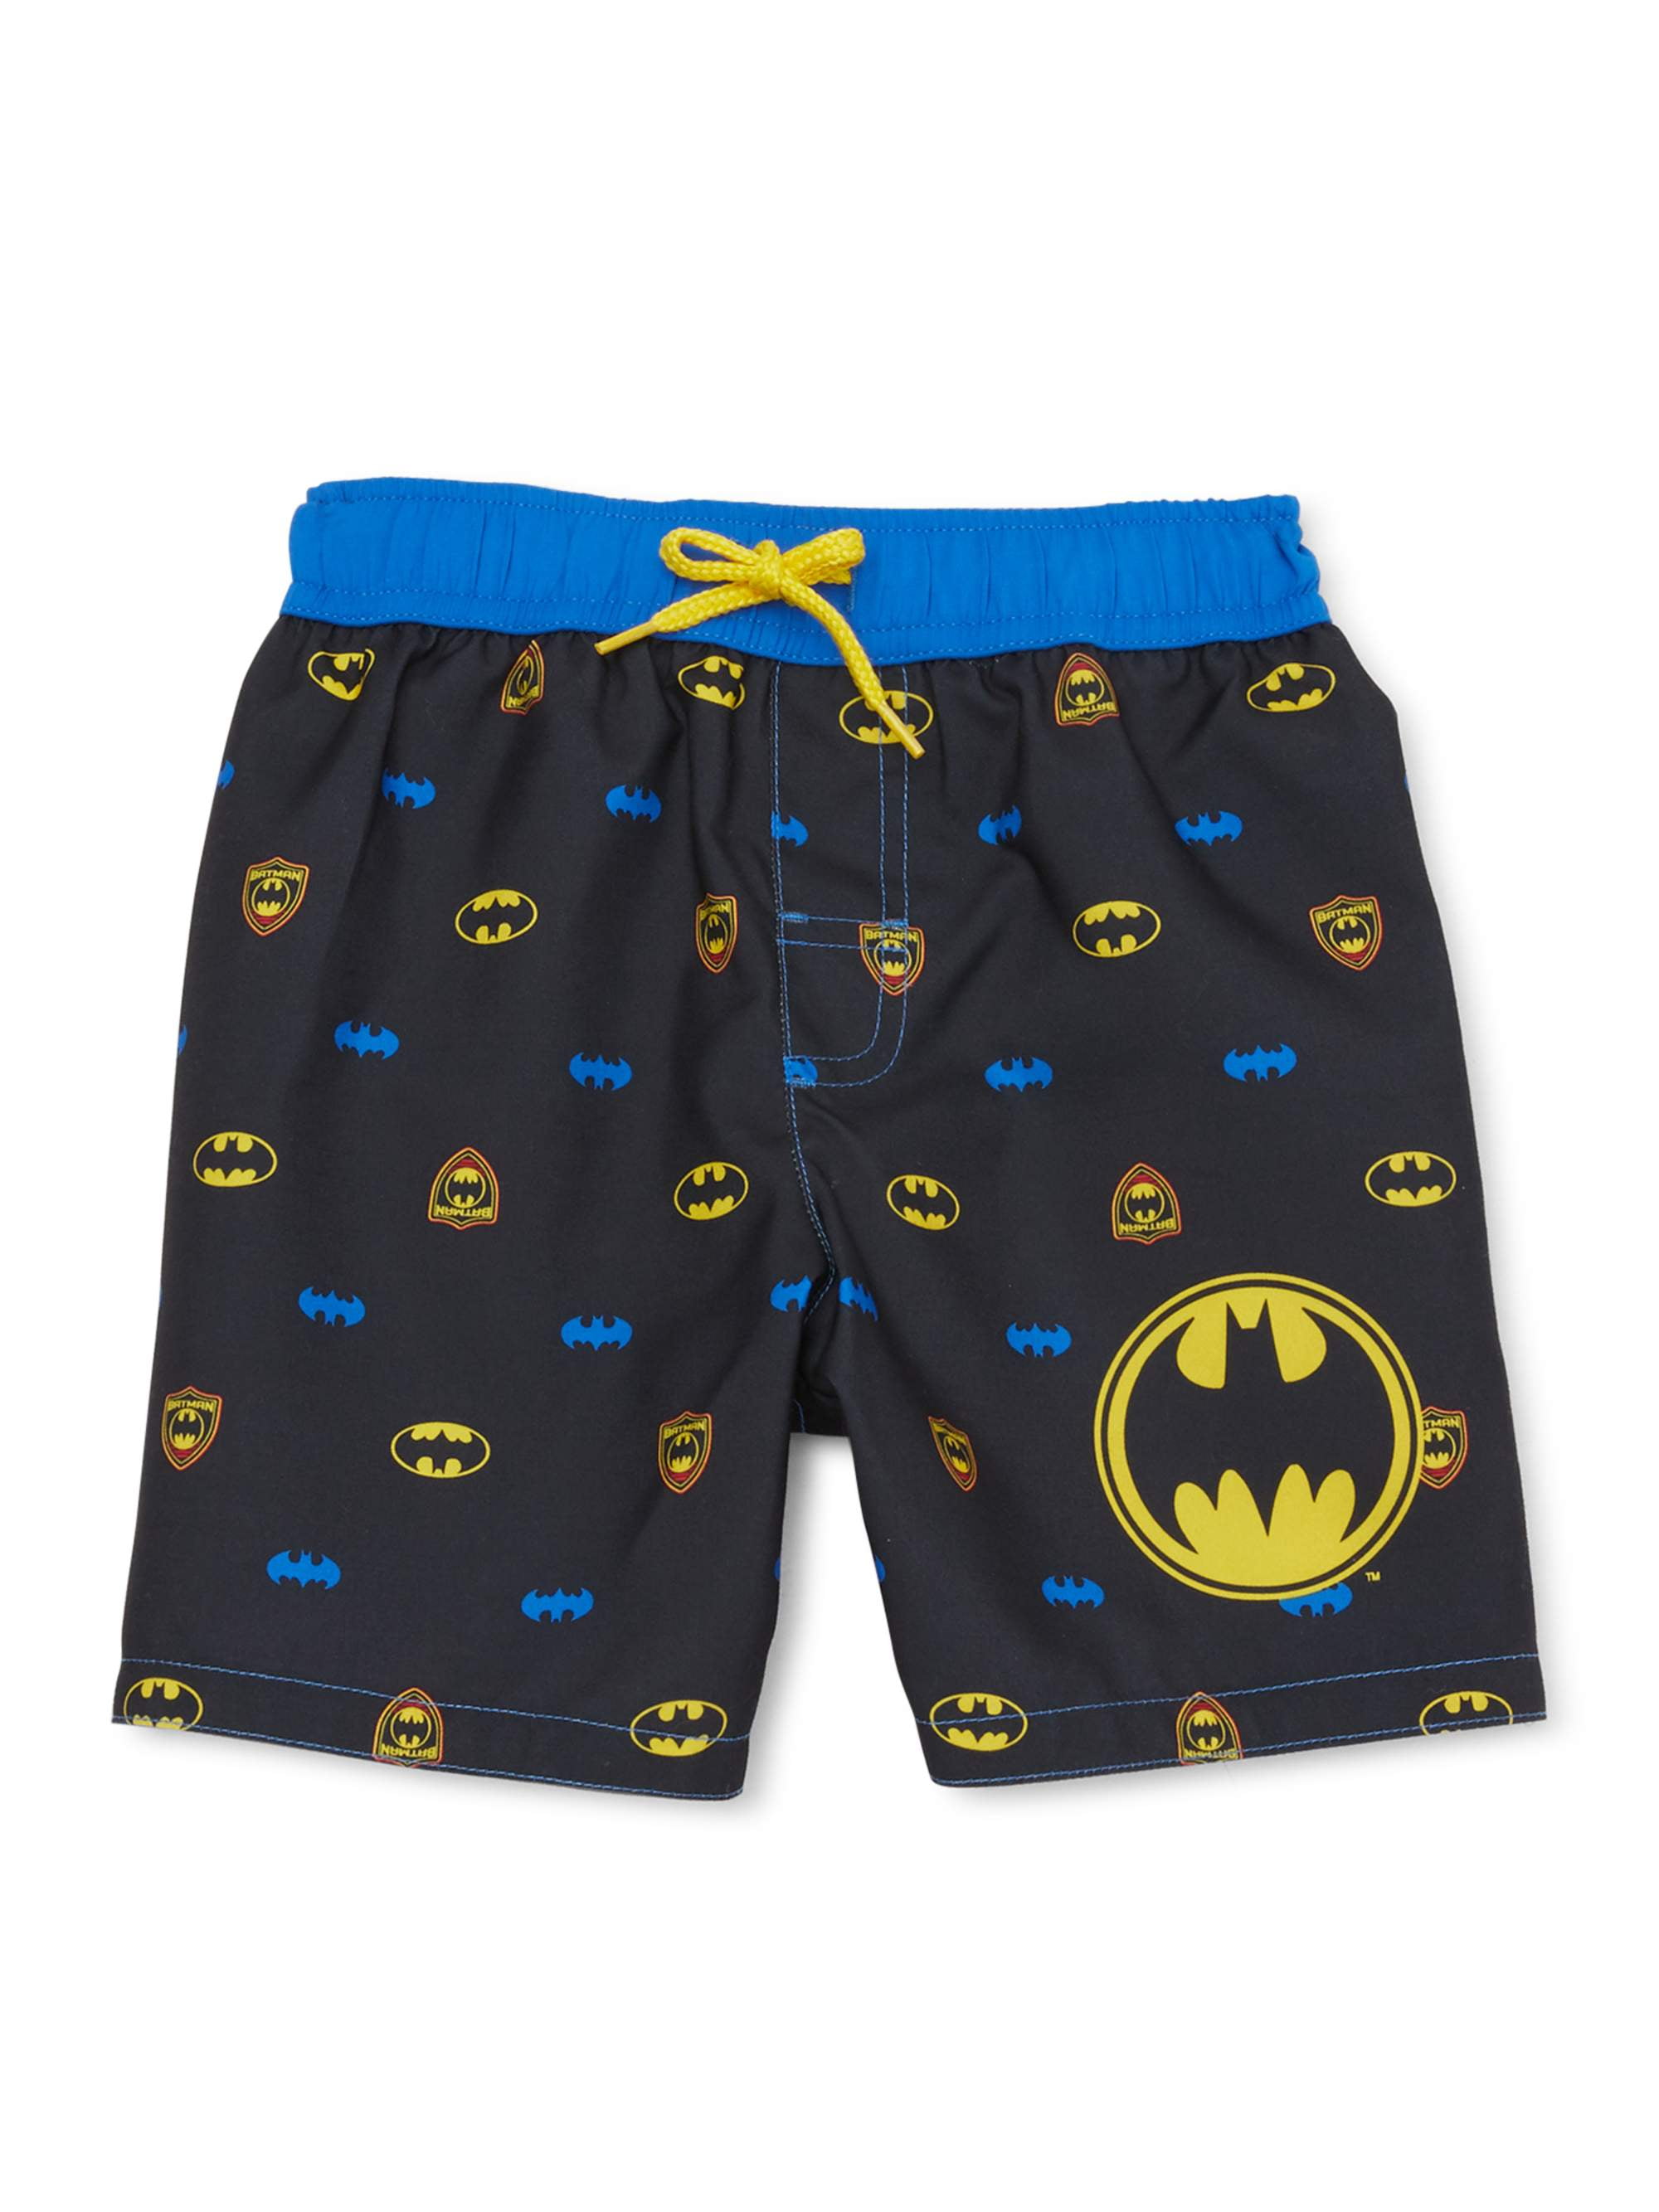 DC Comics Batman Little Boys Toddler Swim Trunks 